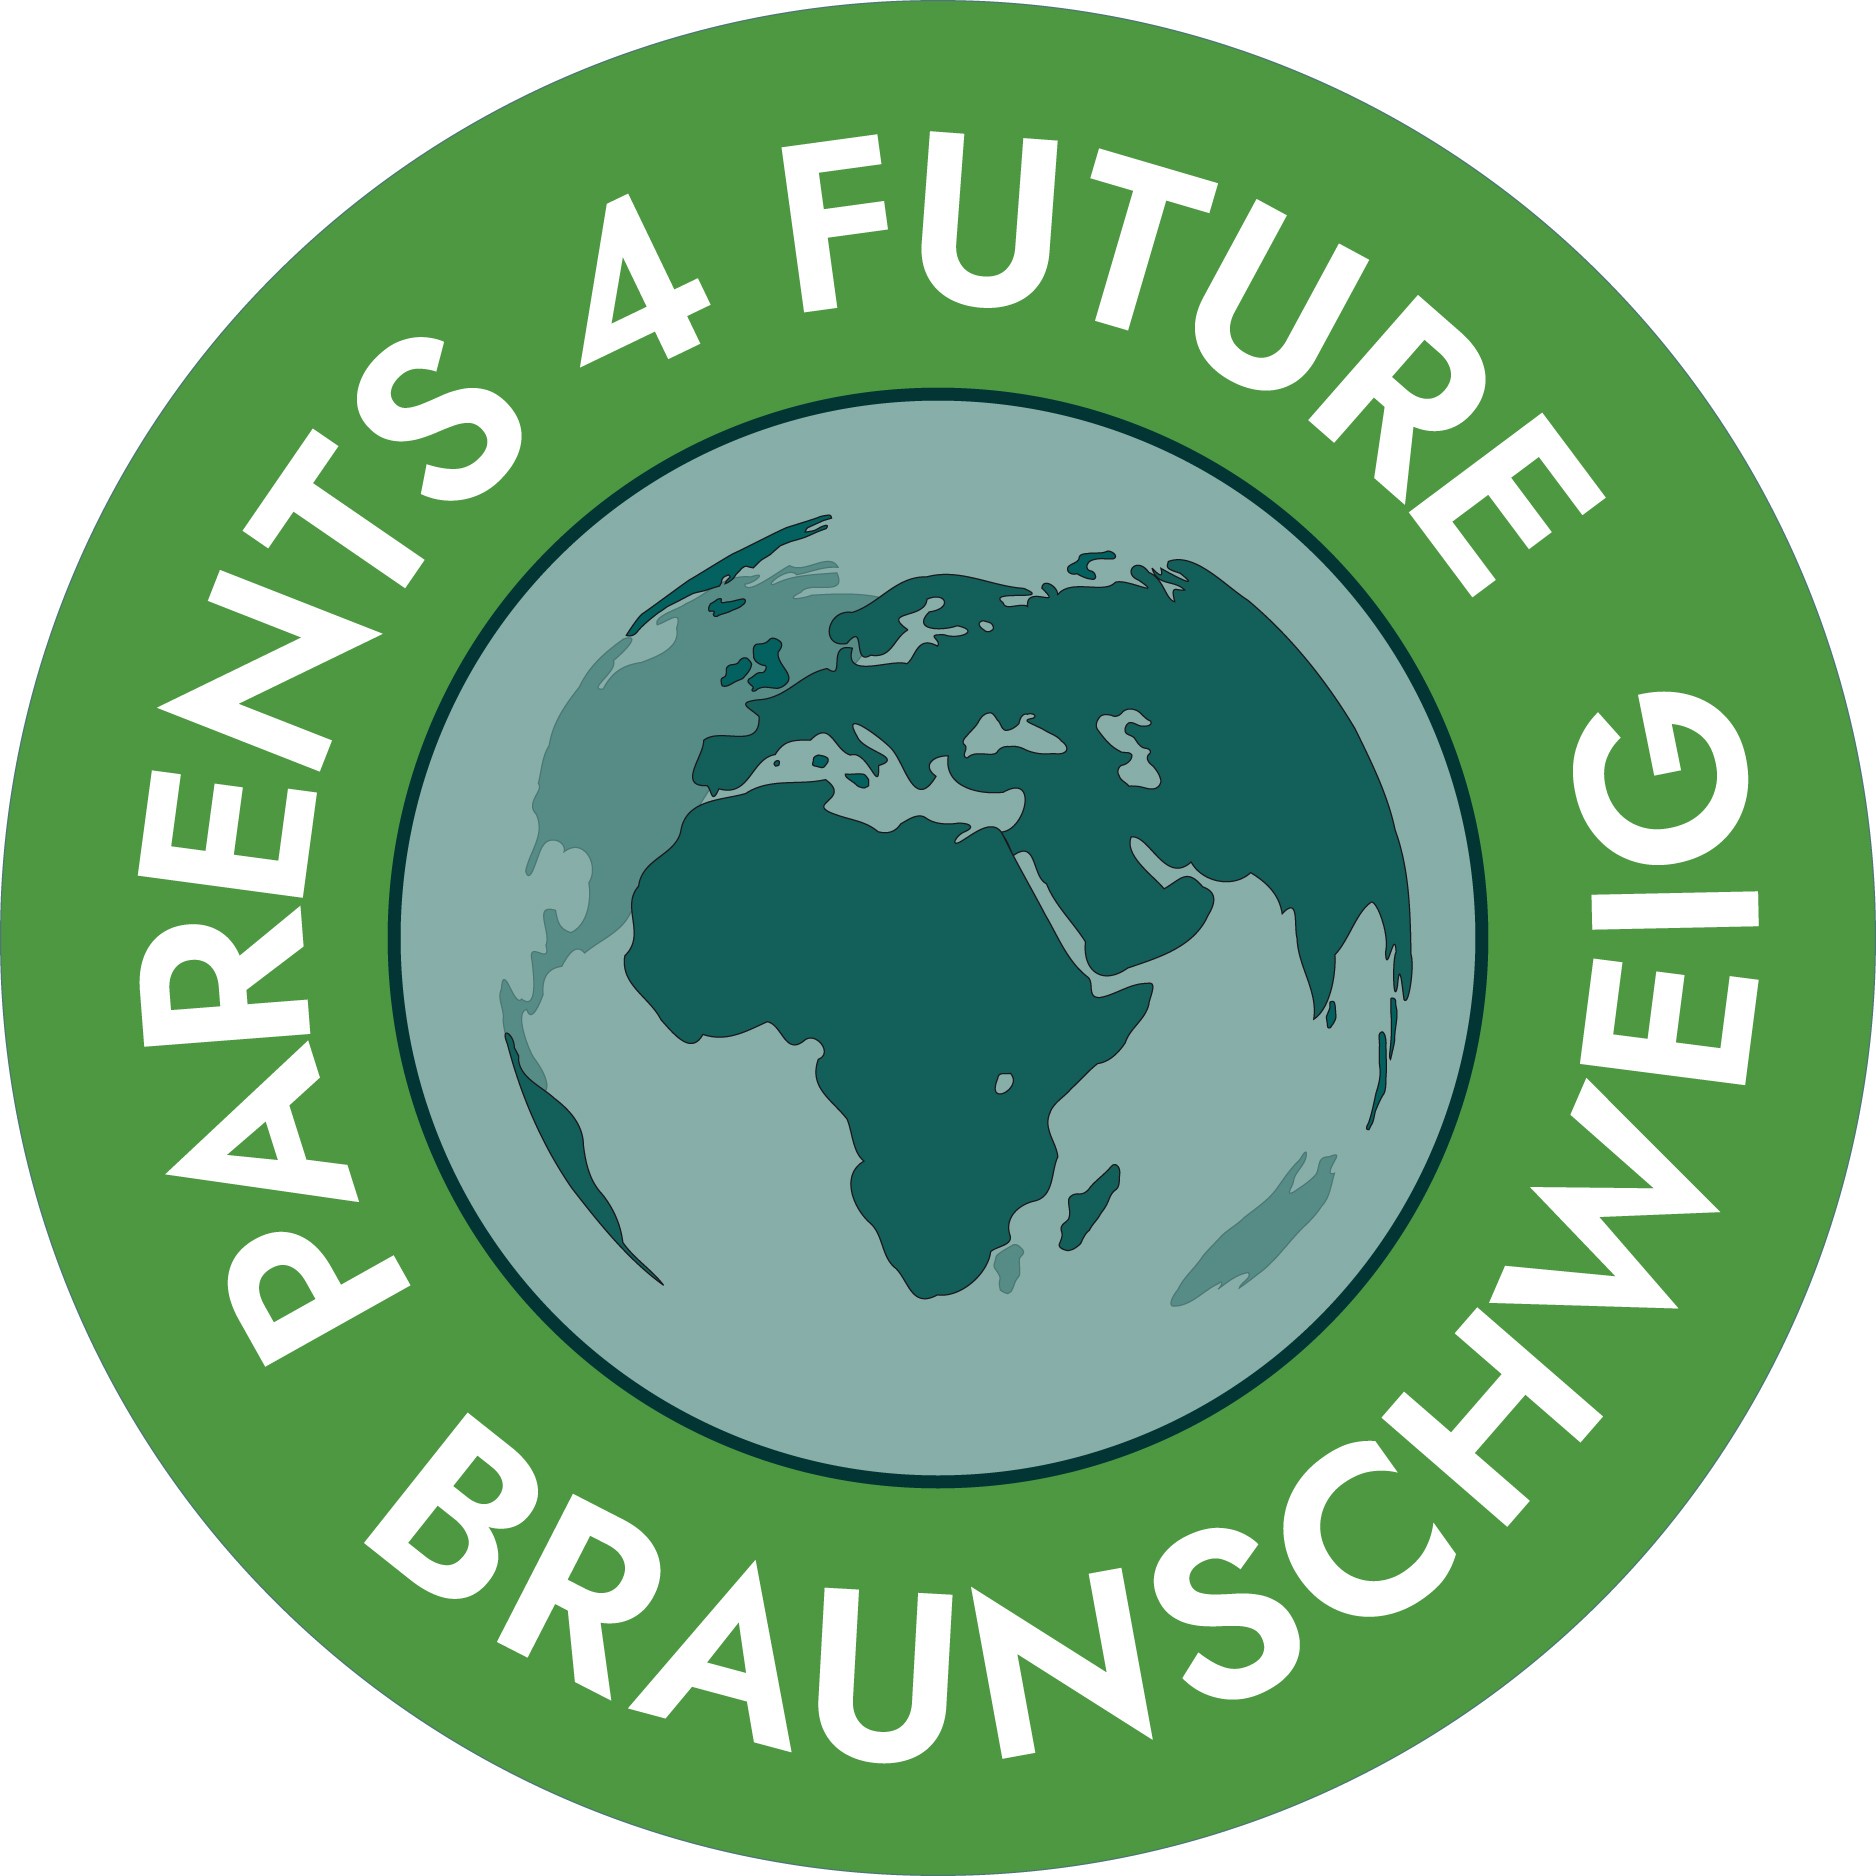 Parents for Future Braunschweig